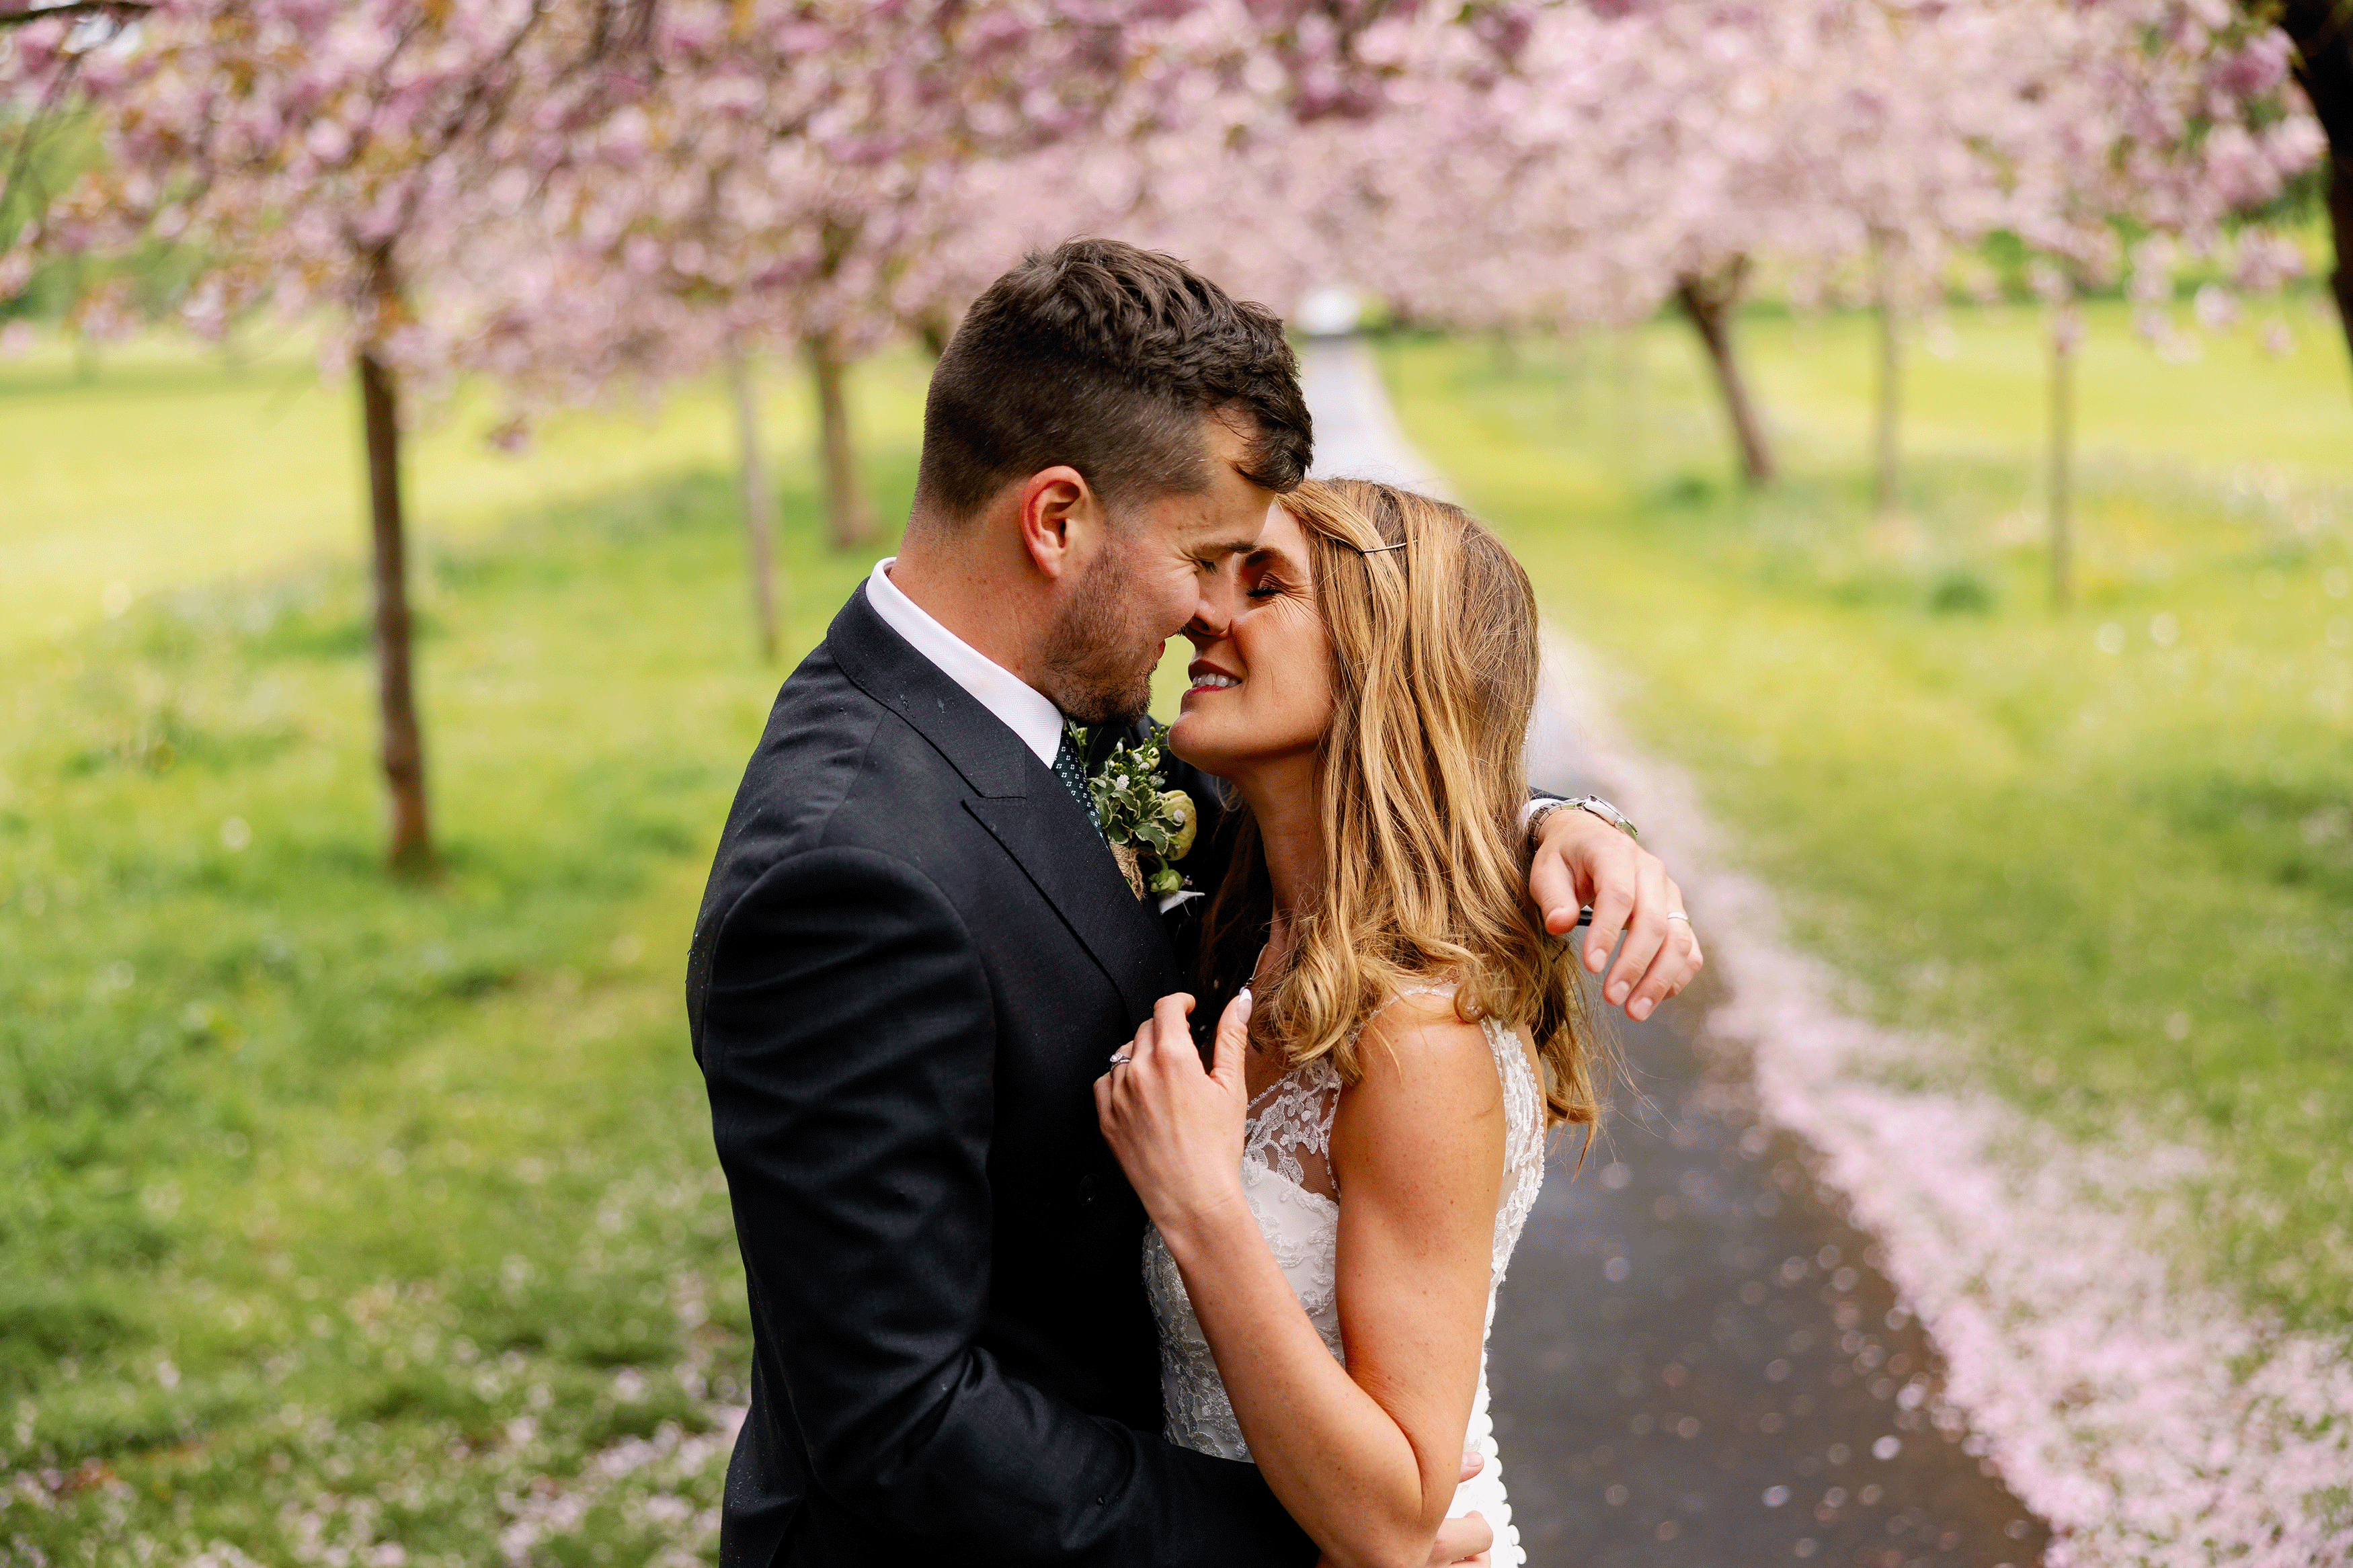 Couple kissing under cherry blossom trees in harrogate.